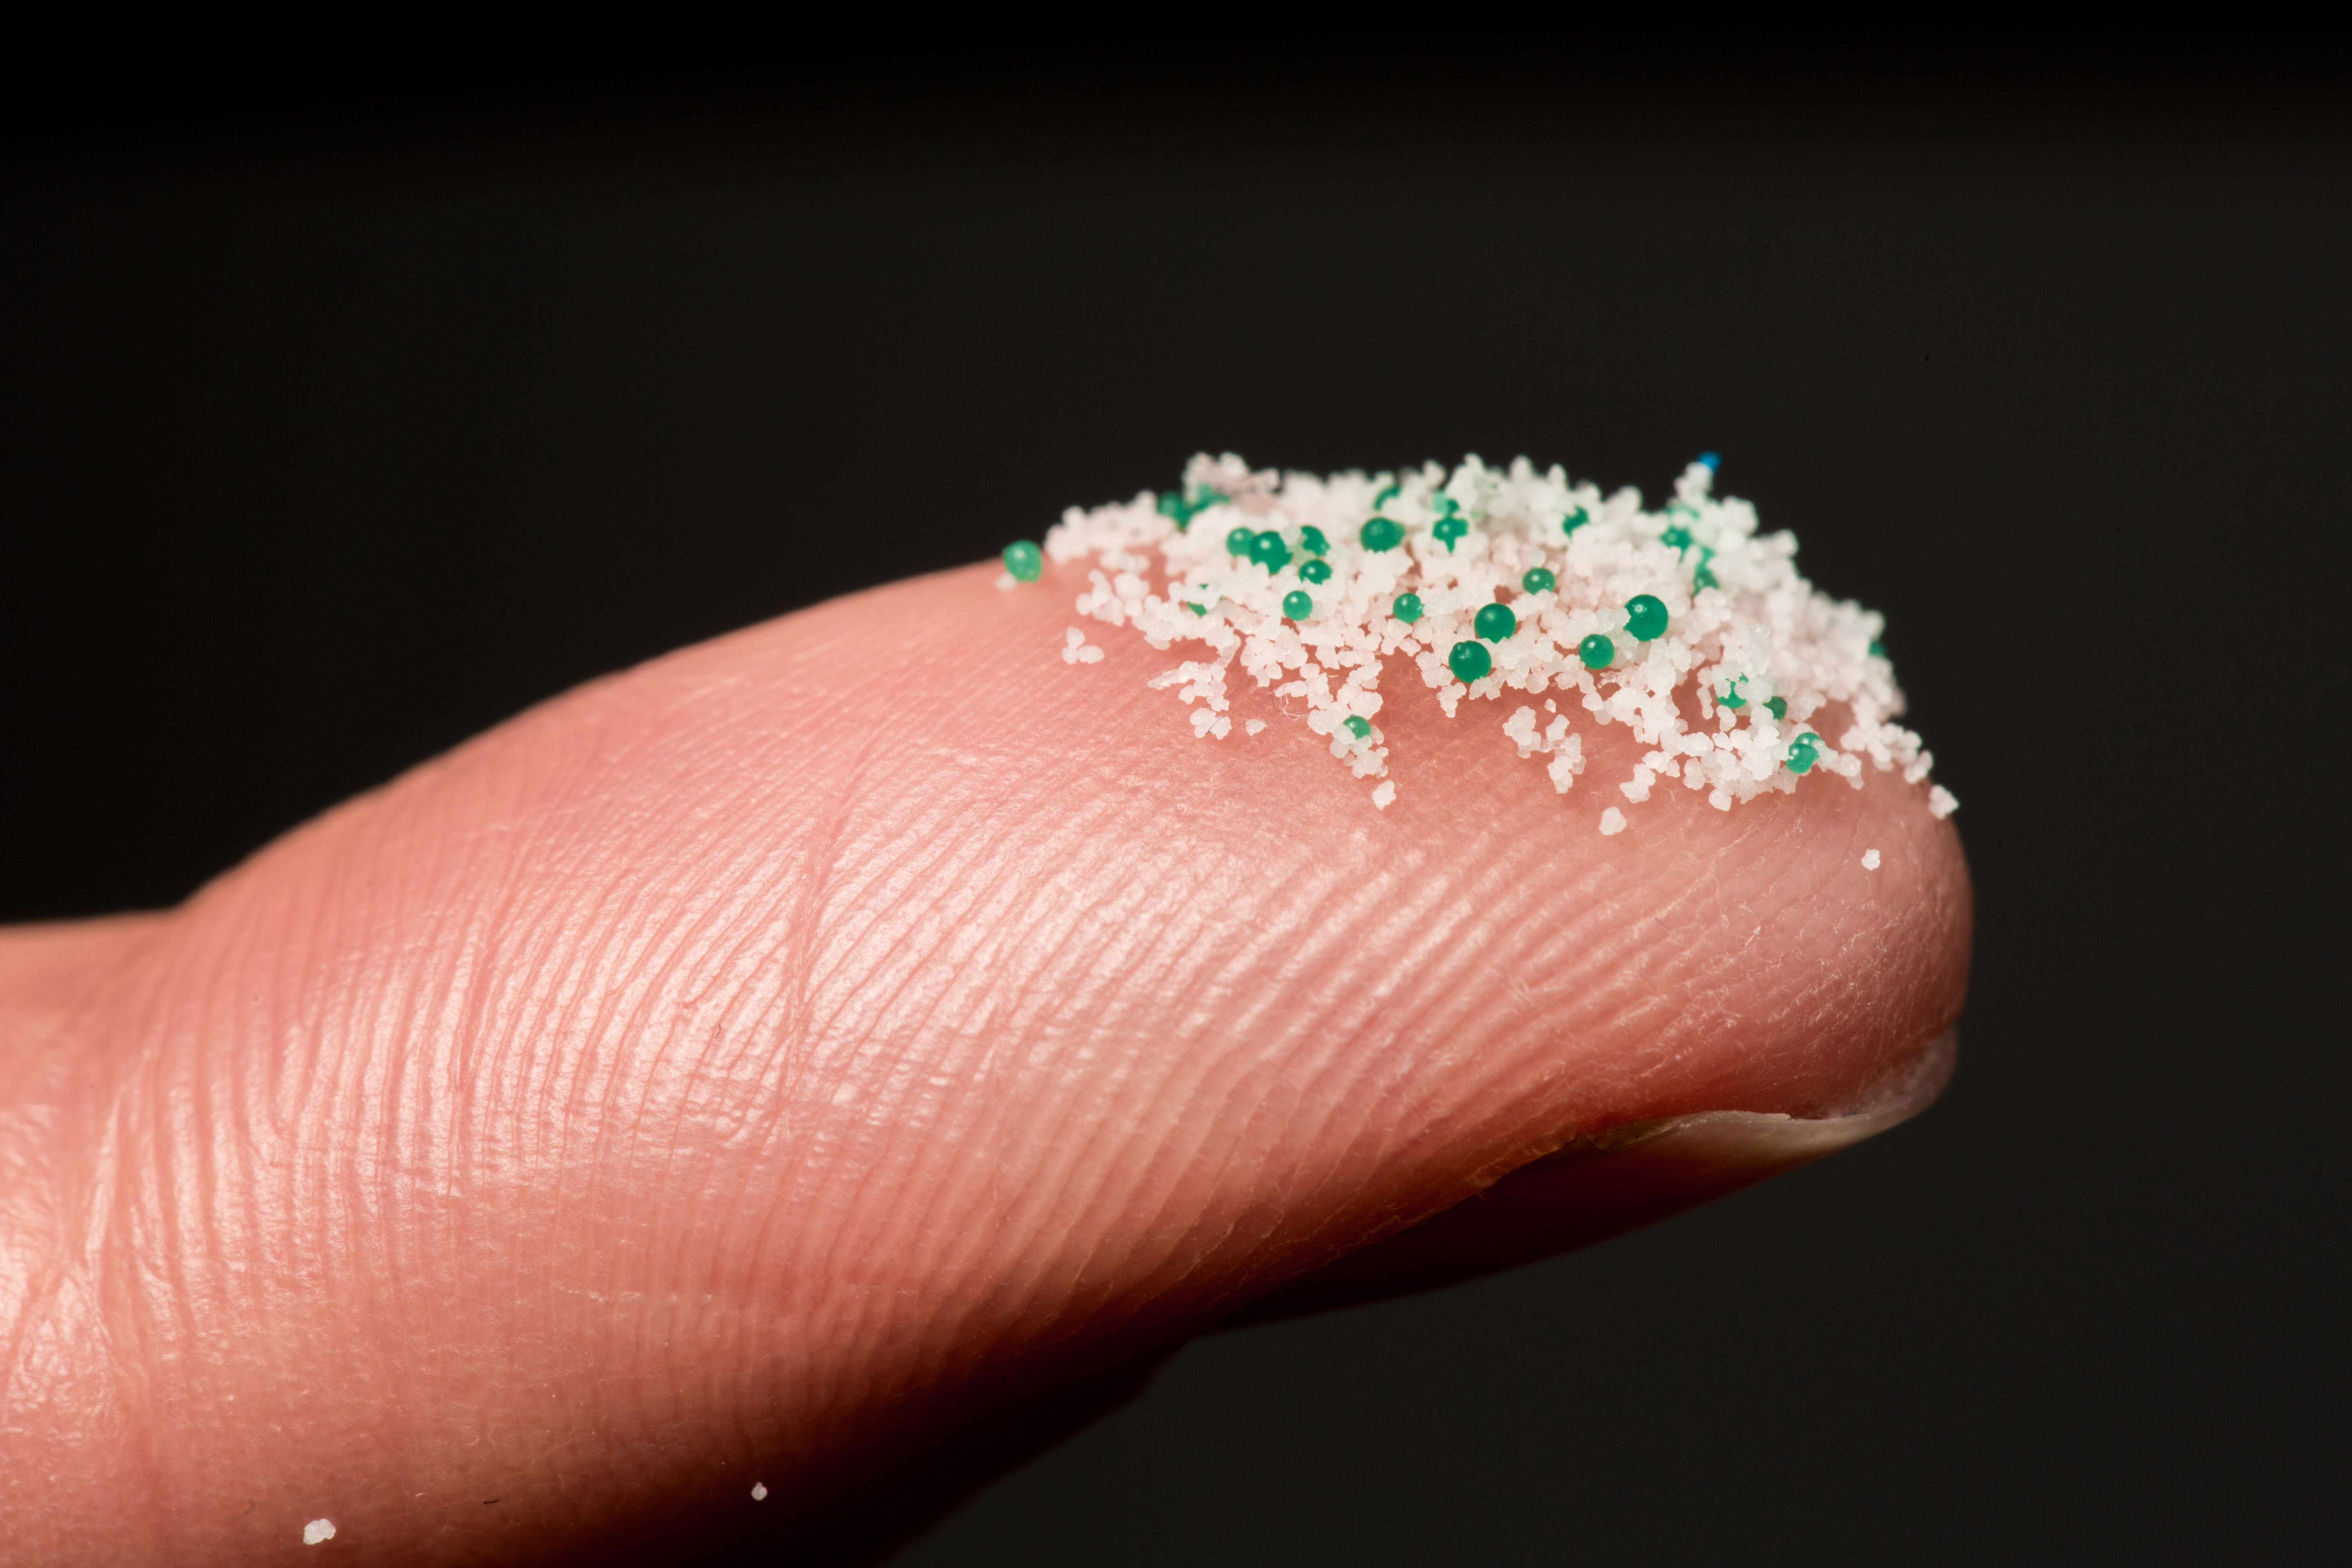 Mikroplastik auf Finger